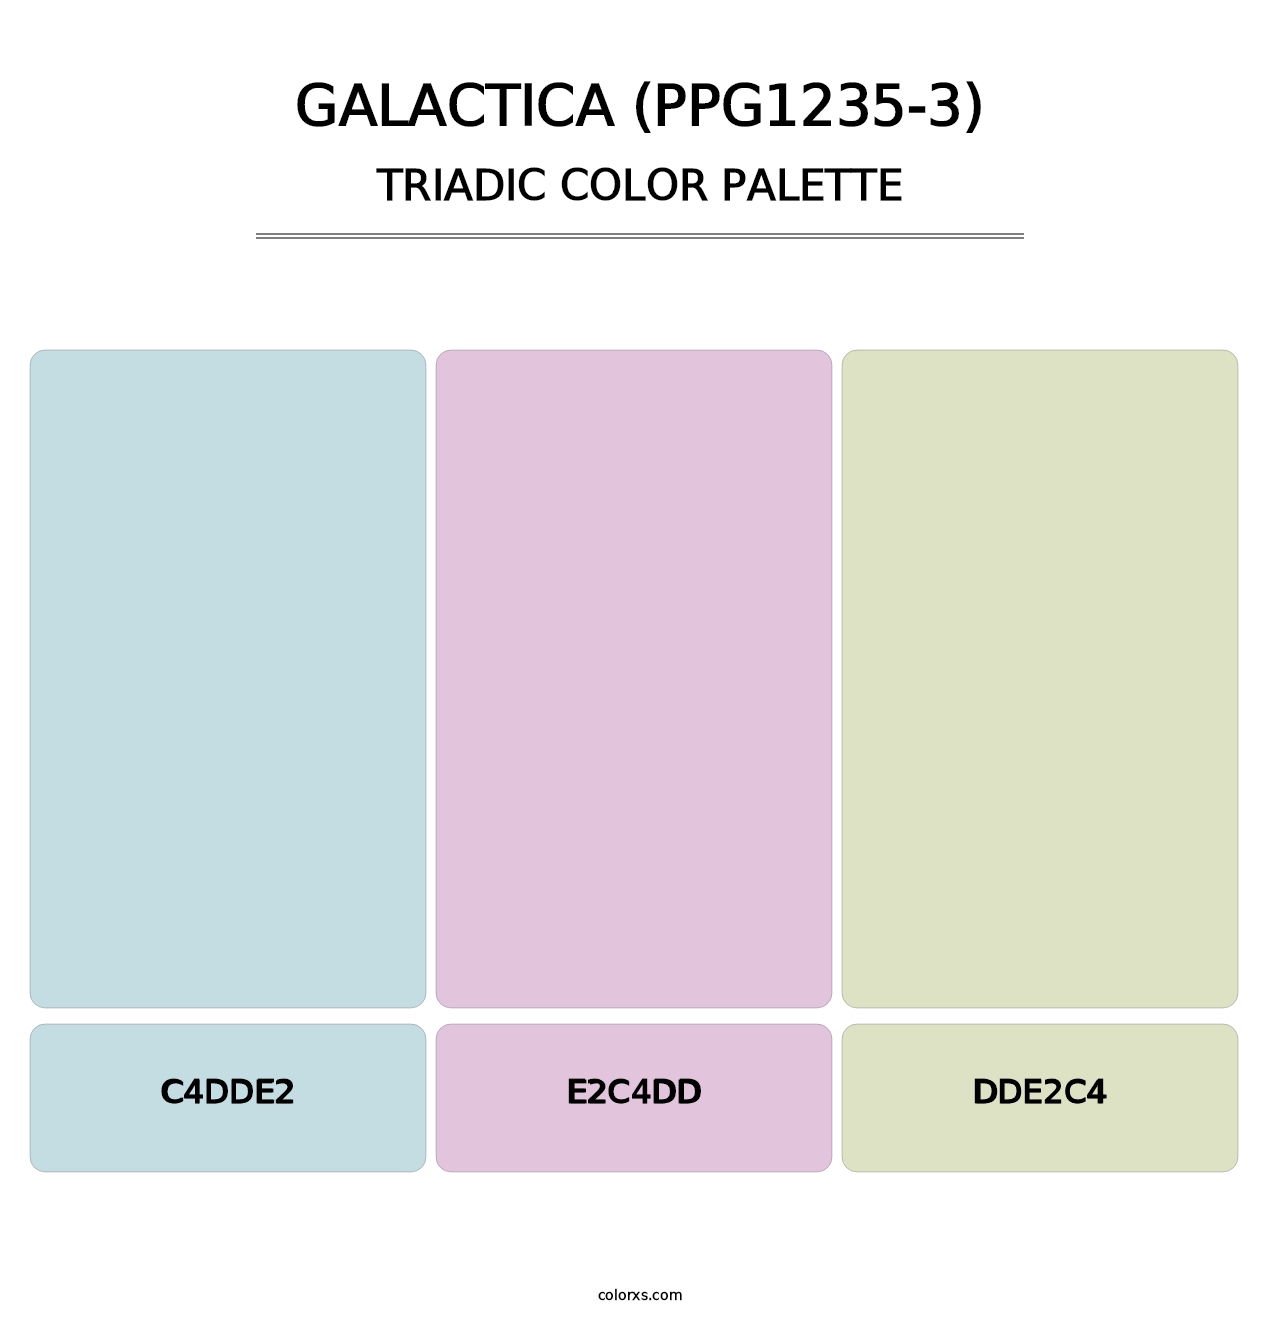 Galactica (PPG1235-3) - Triadic Color Palette